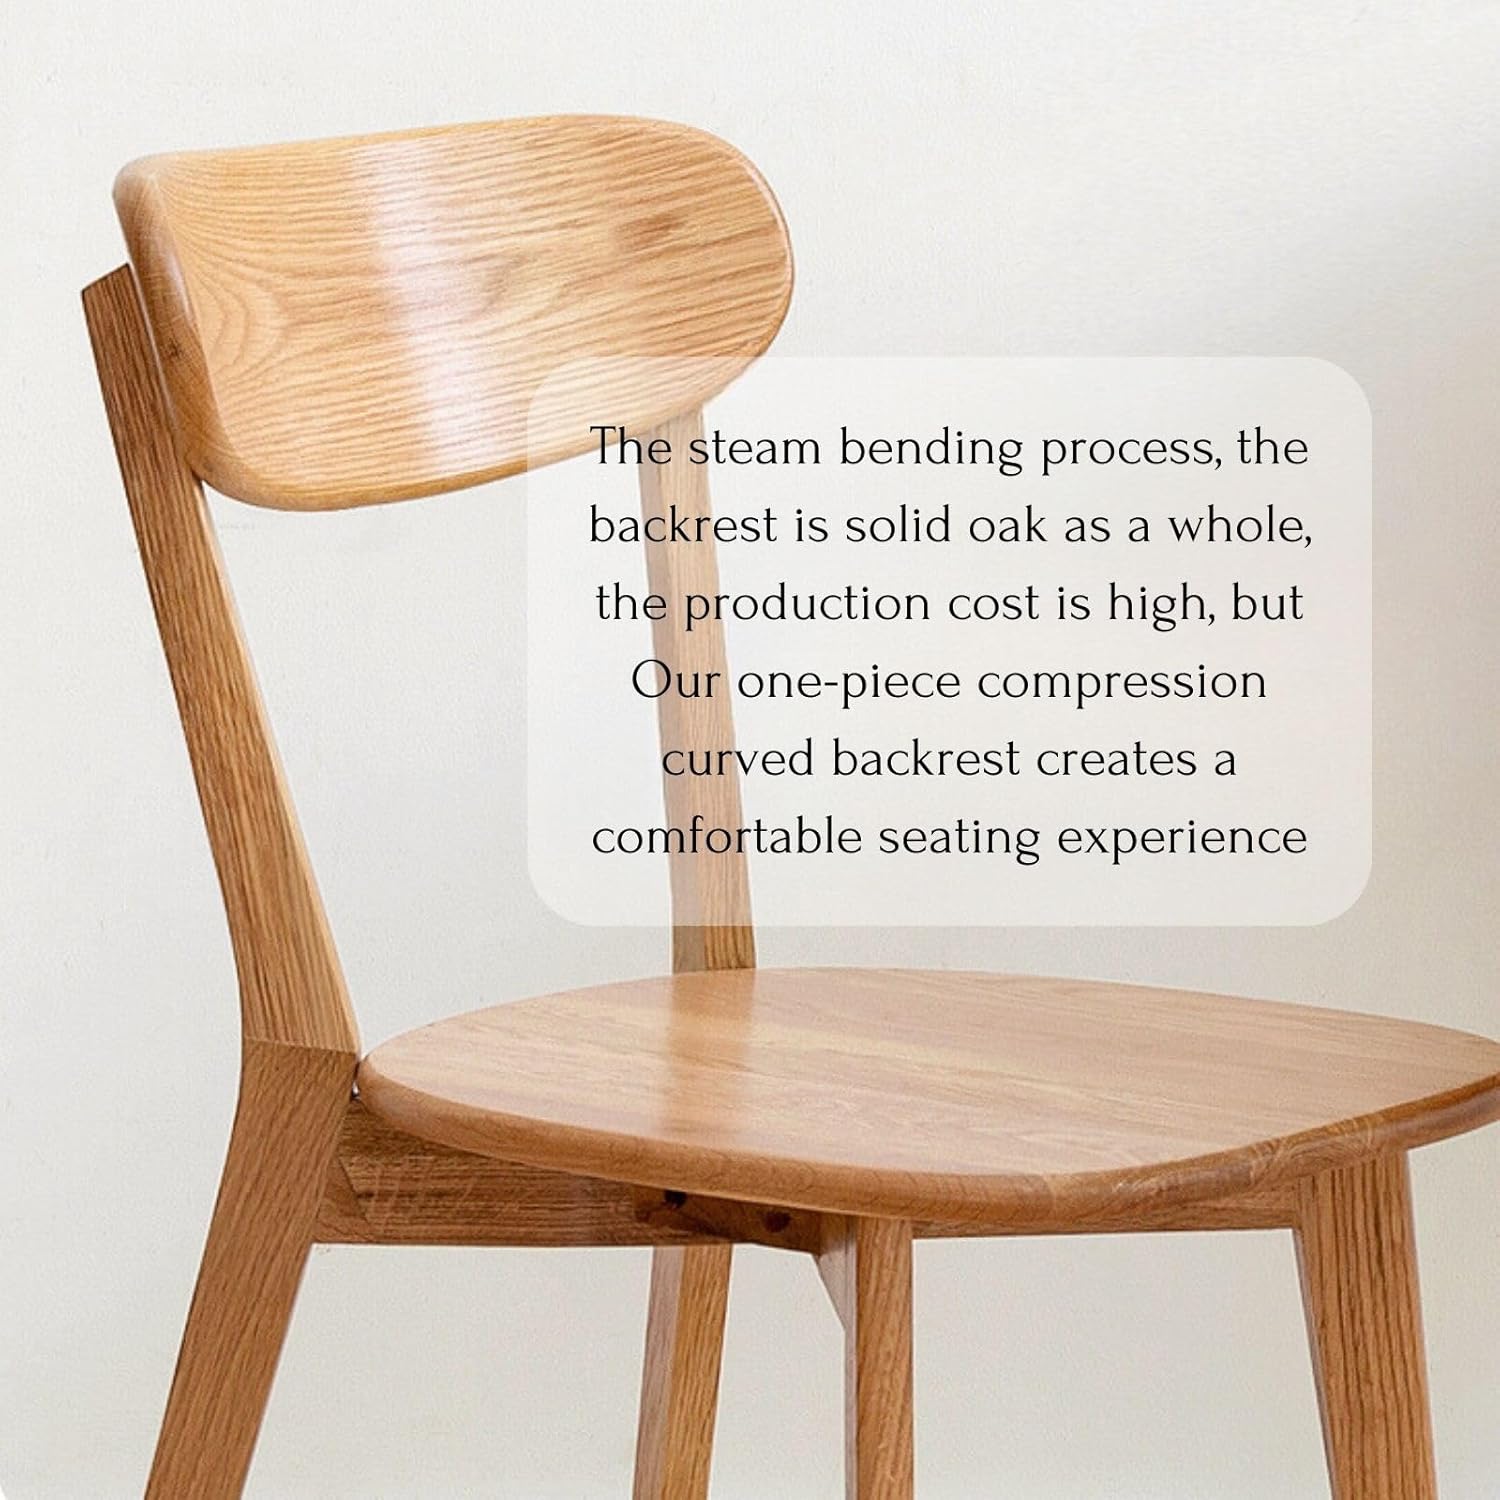 Sillas de comedor 100% de madera de roble macizo, juego de 1 sillas de cocina,